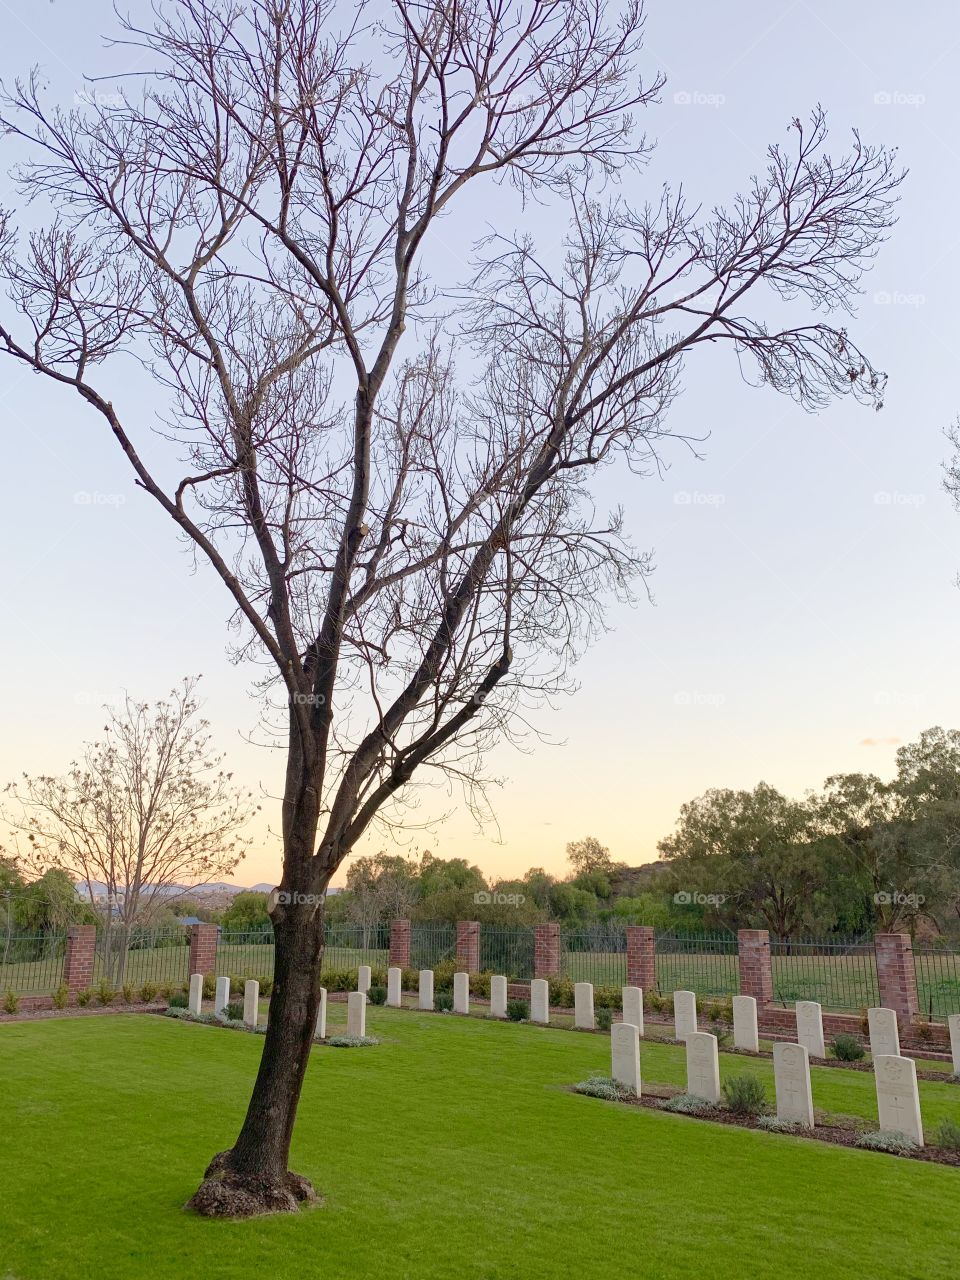 Sunset at Tamworth War Cemetery, Tamworth NSW Australia 